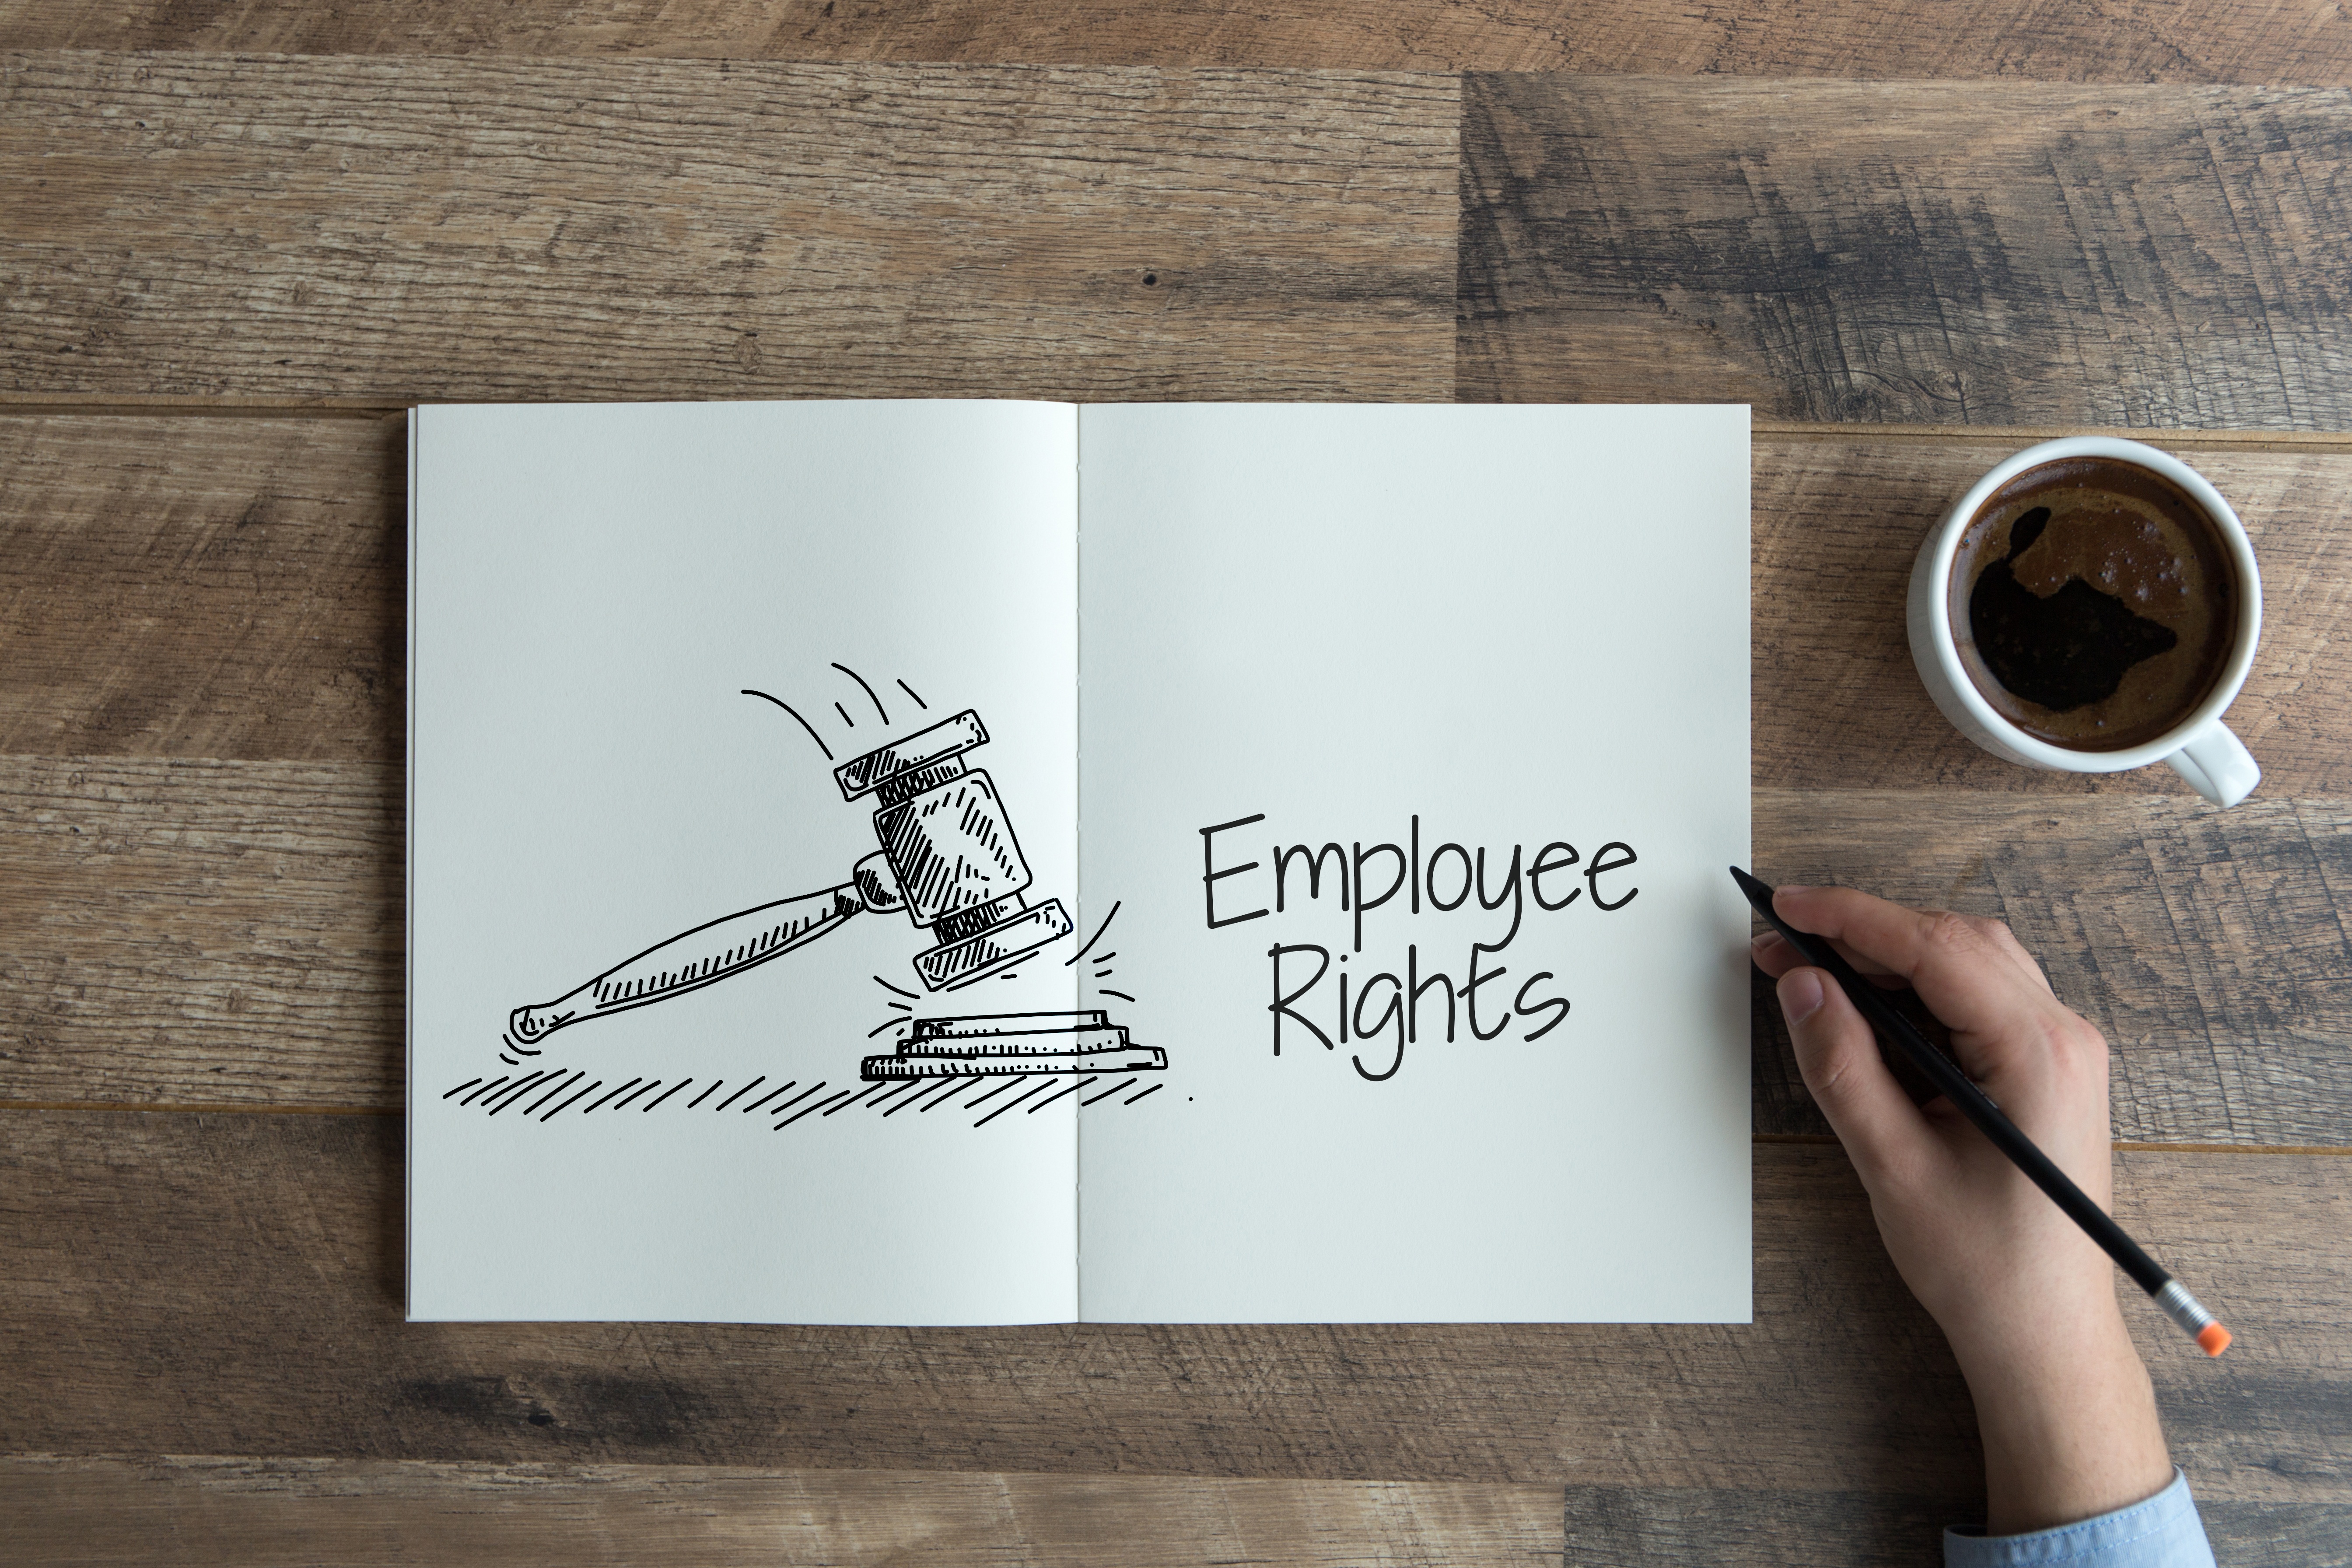 Datum RPO: Employee Rights